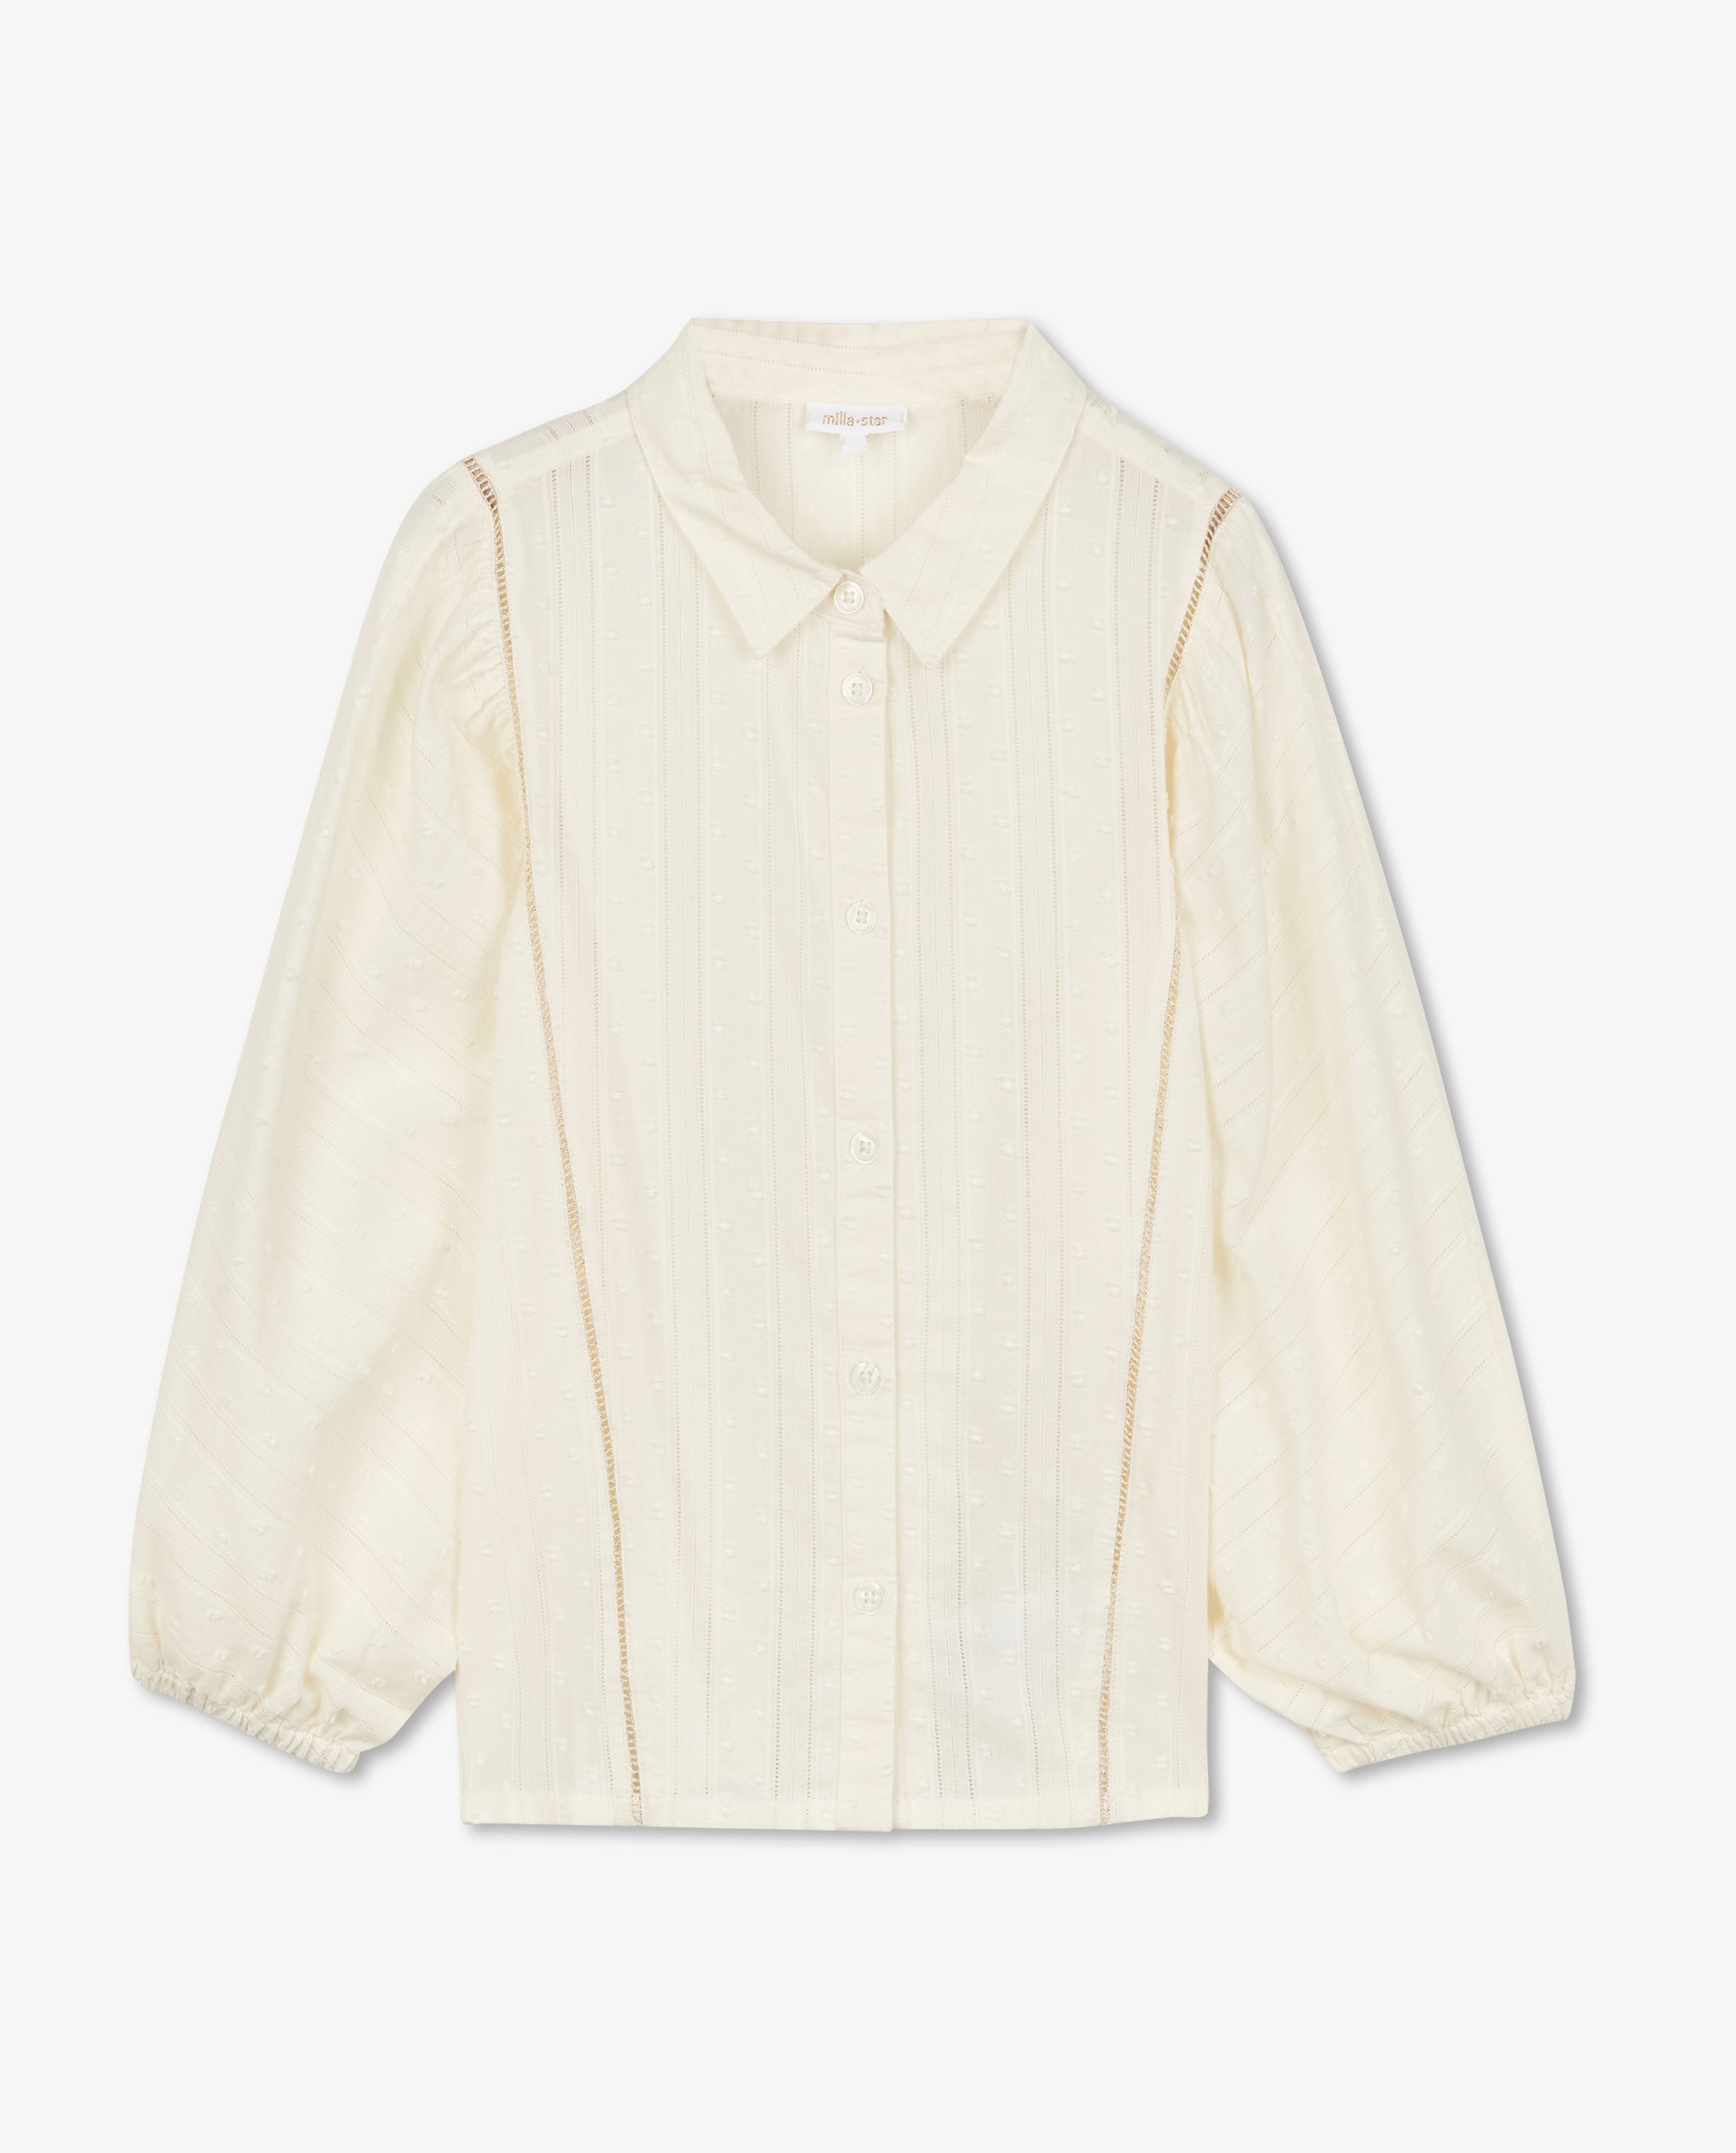 Hemden - Witte blouse, Communie